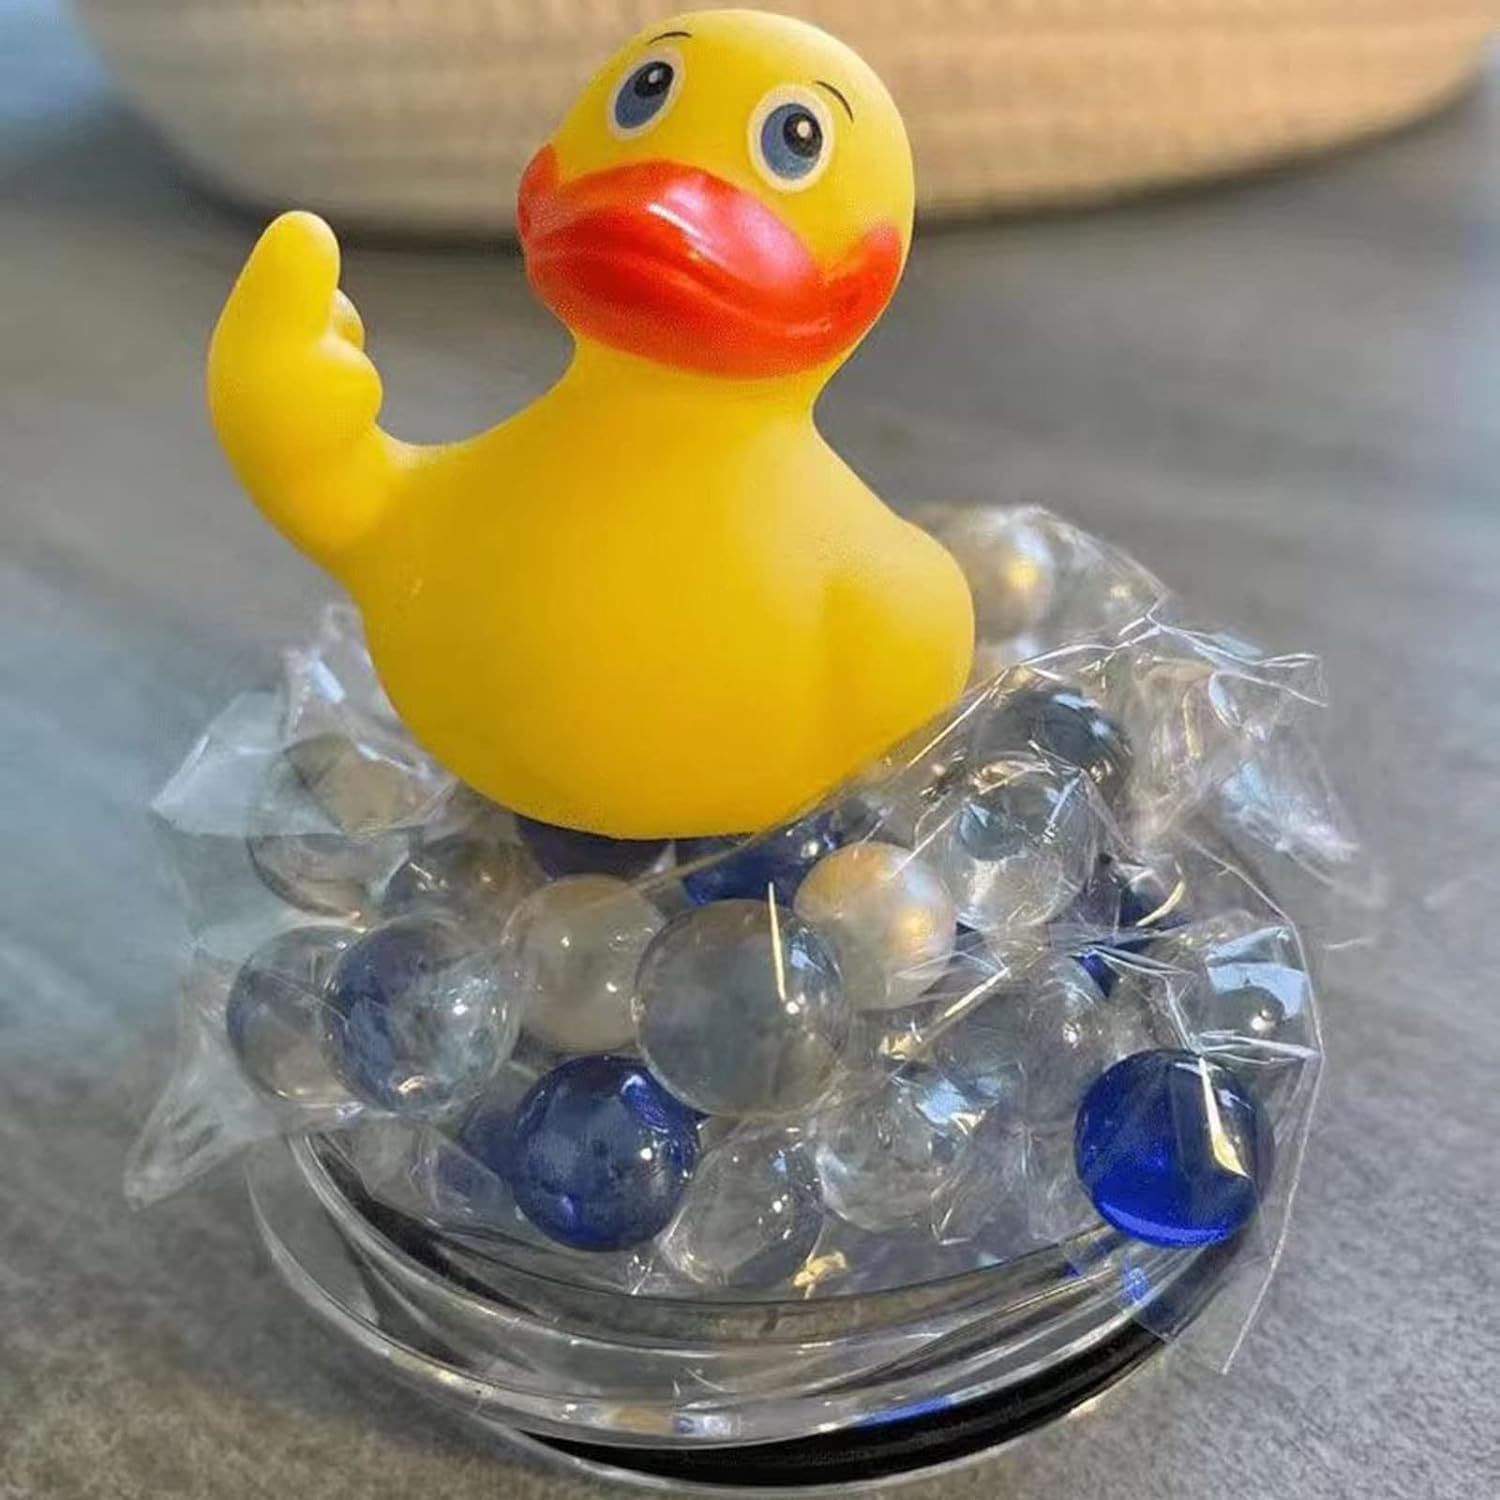 Middle Finger Rubber Duck